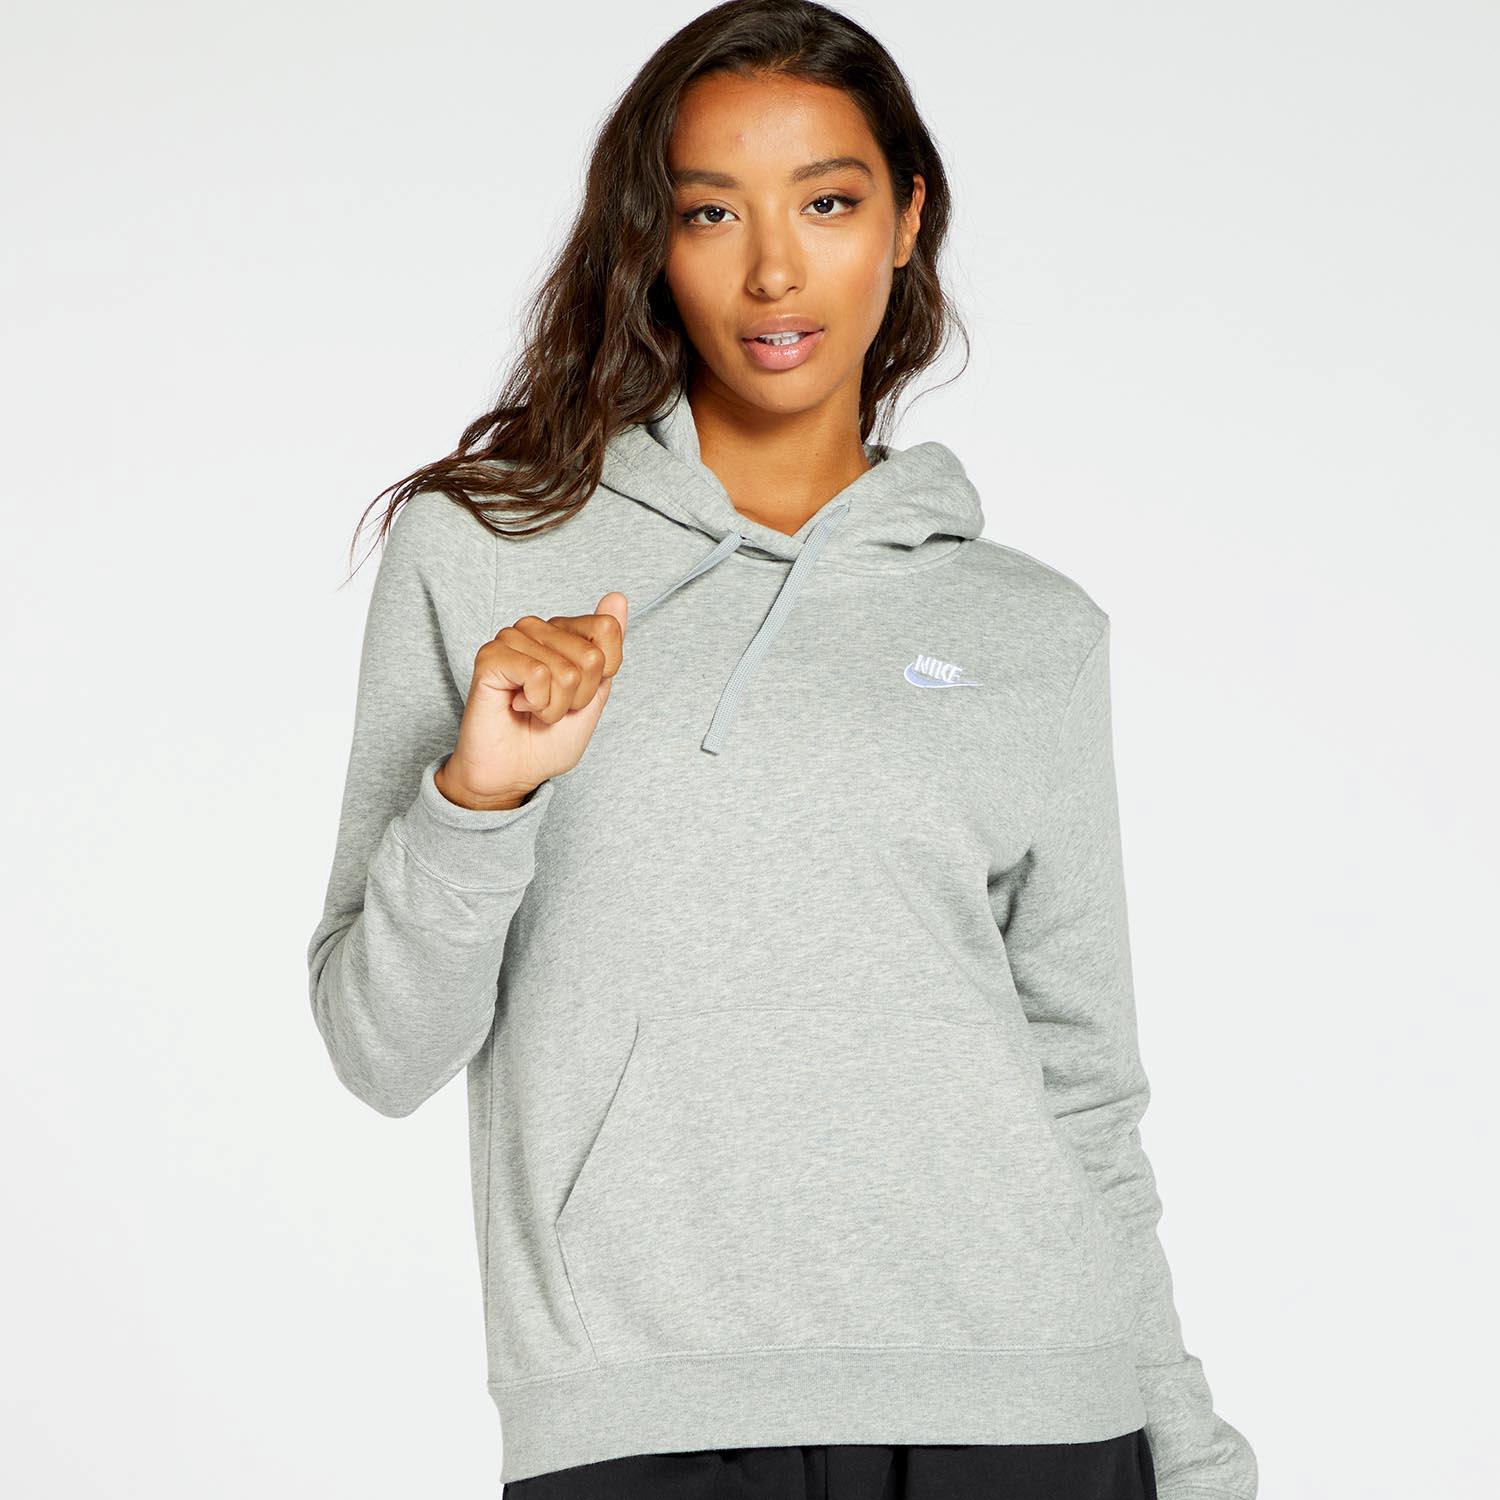 Nike Small Logo - Cinza - Sweatshirt Mulher tamanho M